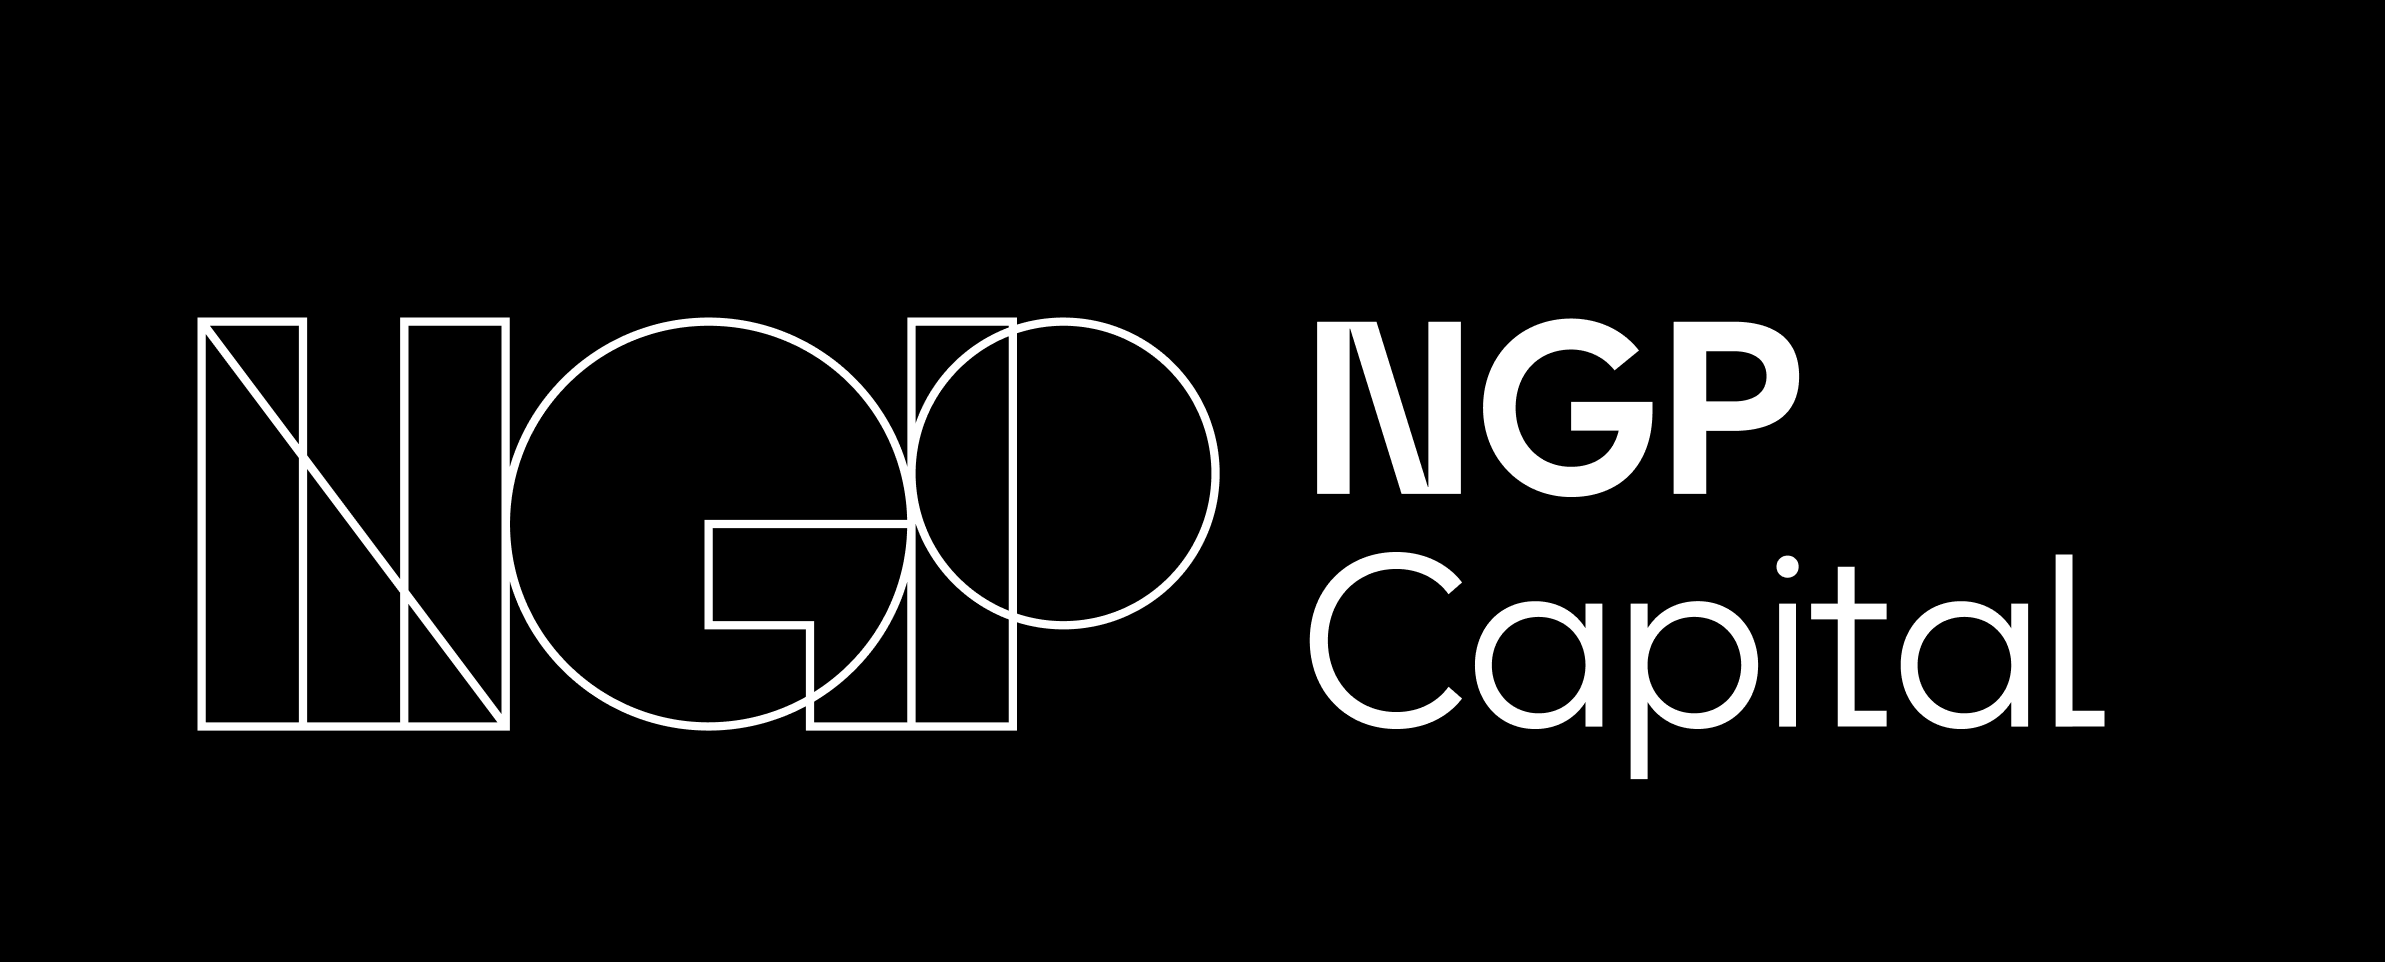 EventP NGP Capital